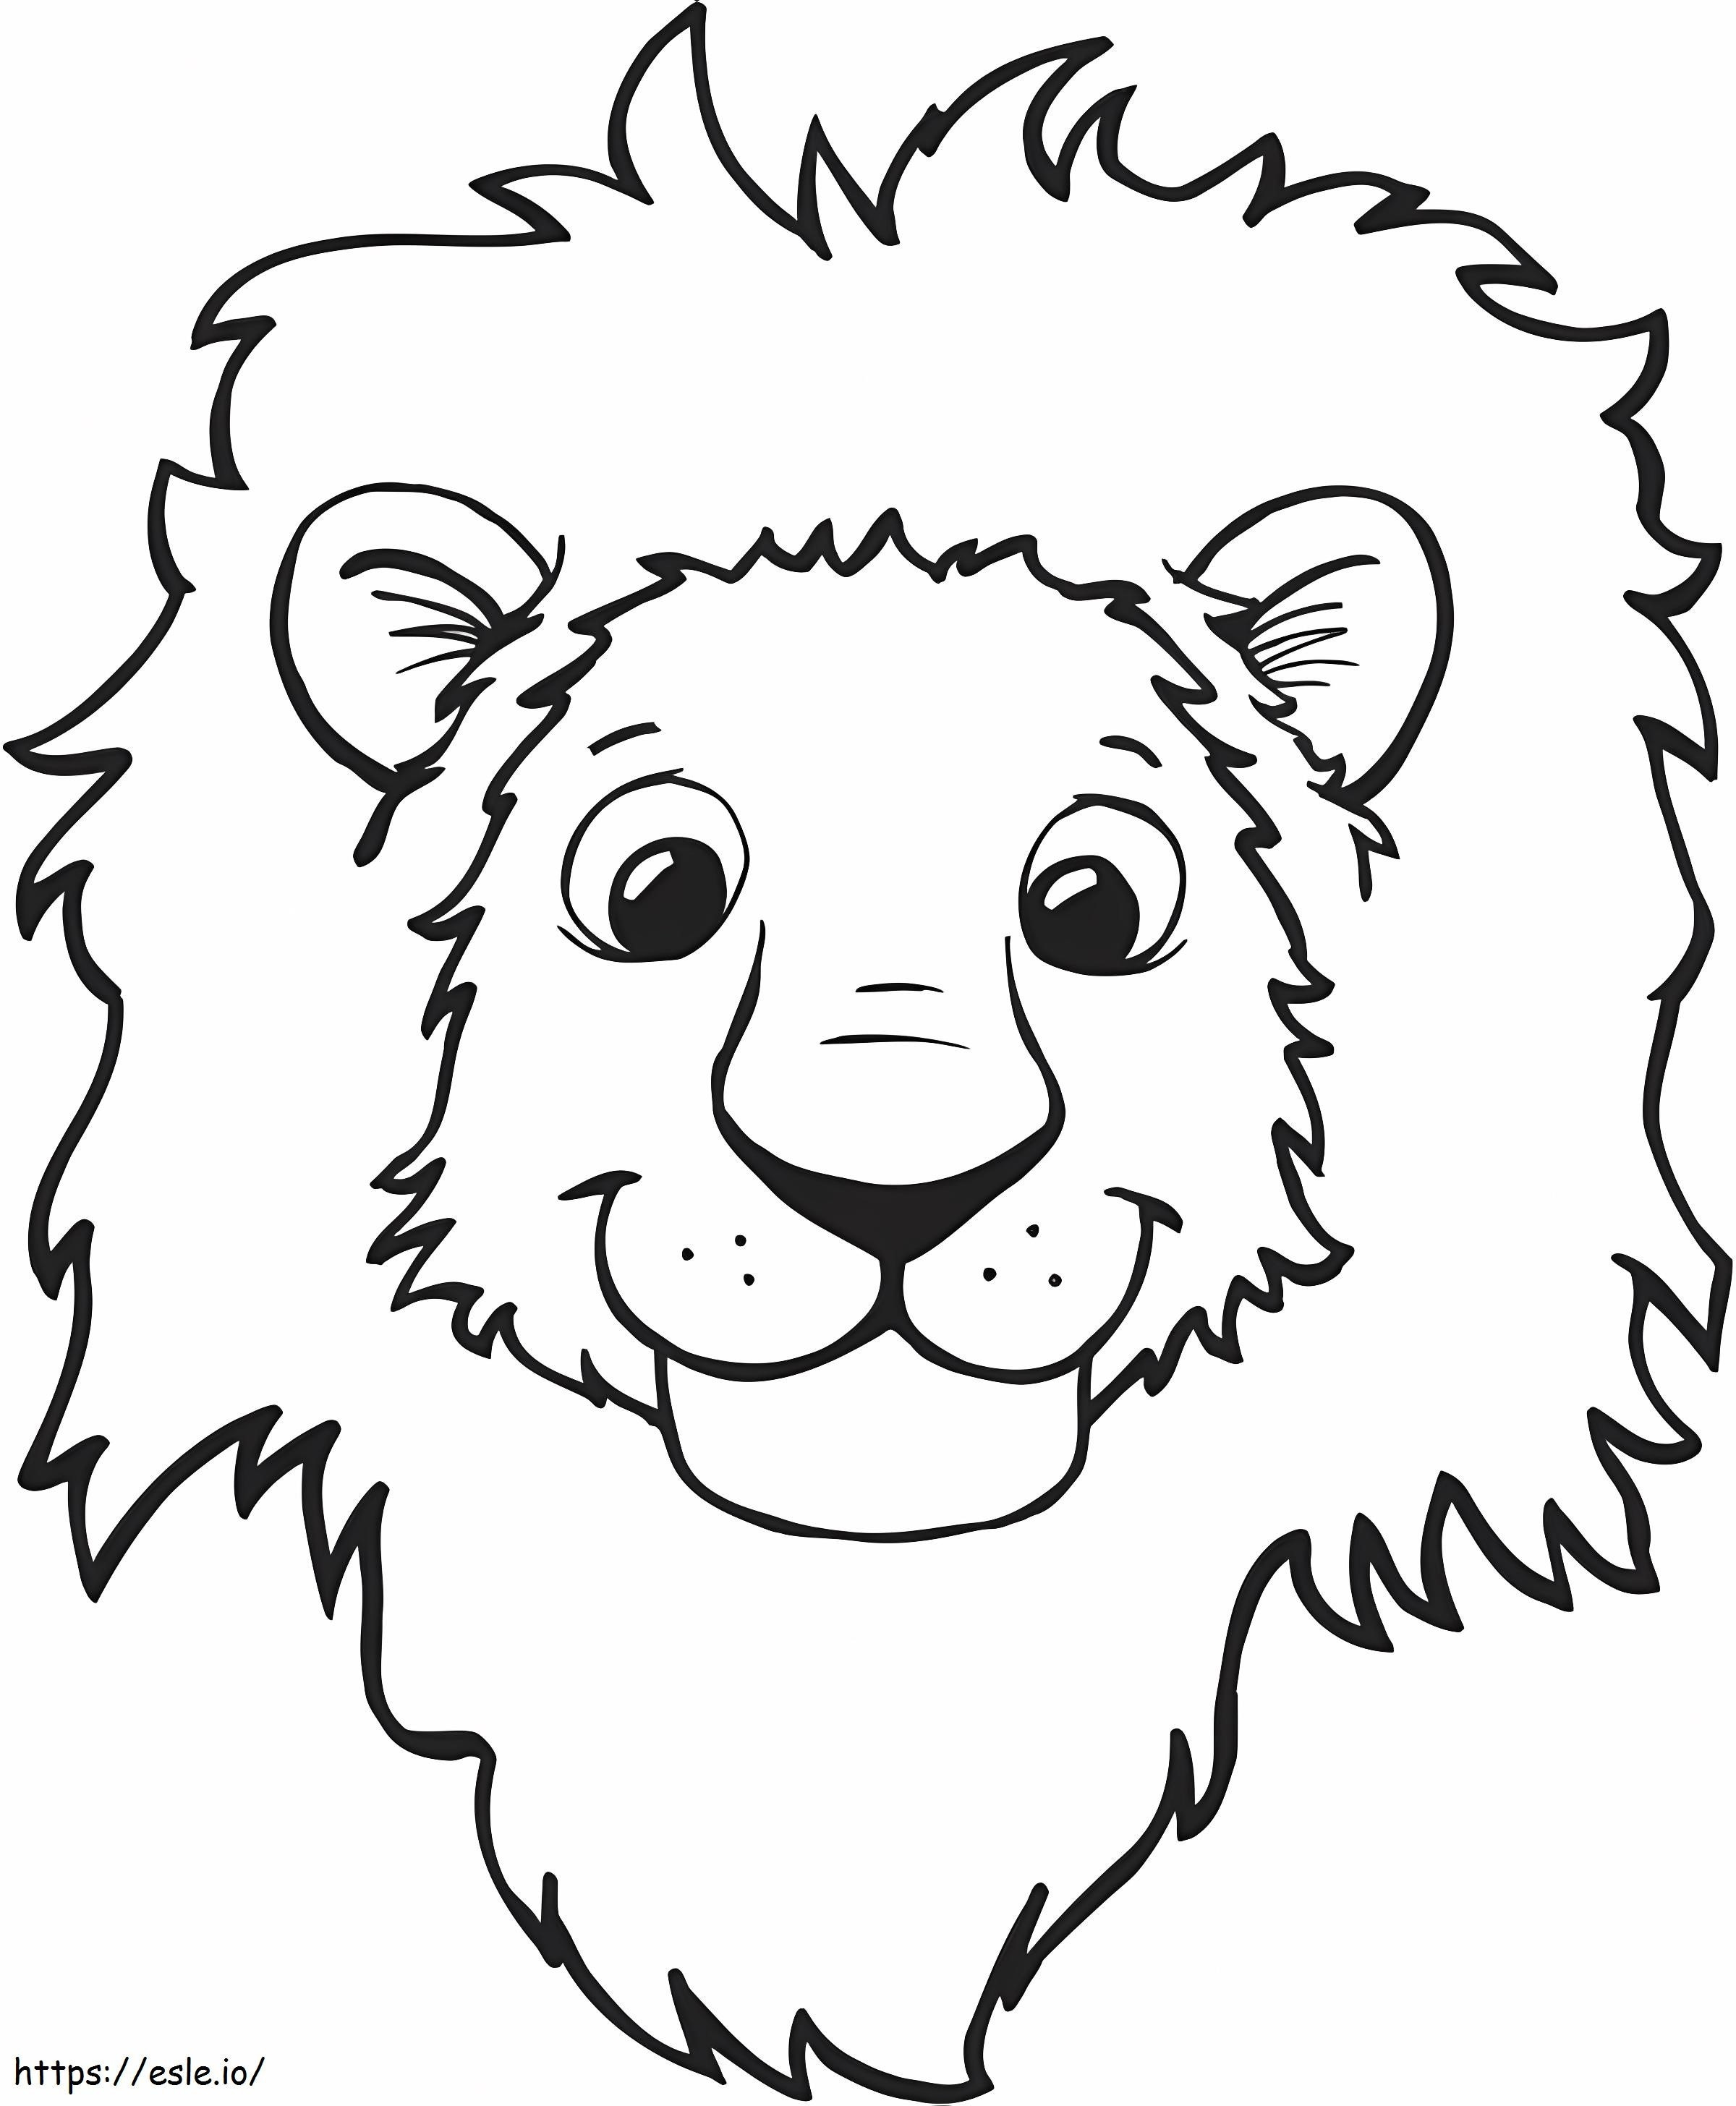 Lion4 coloring page